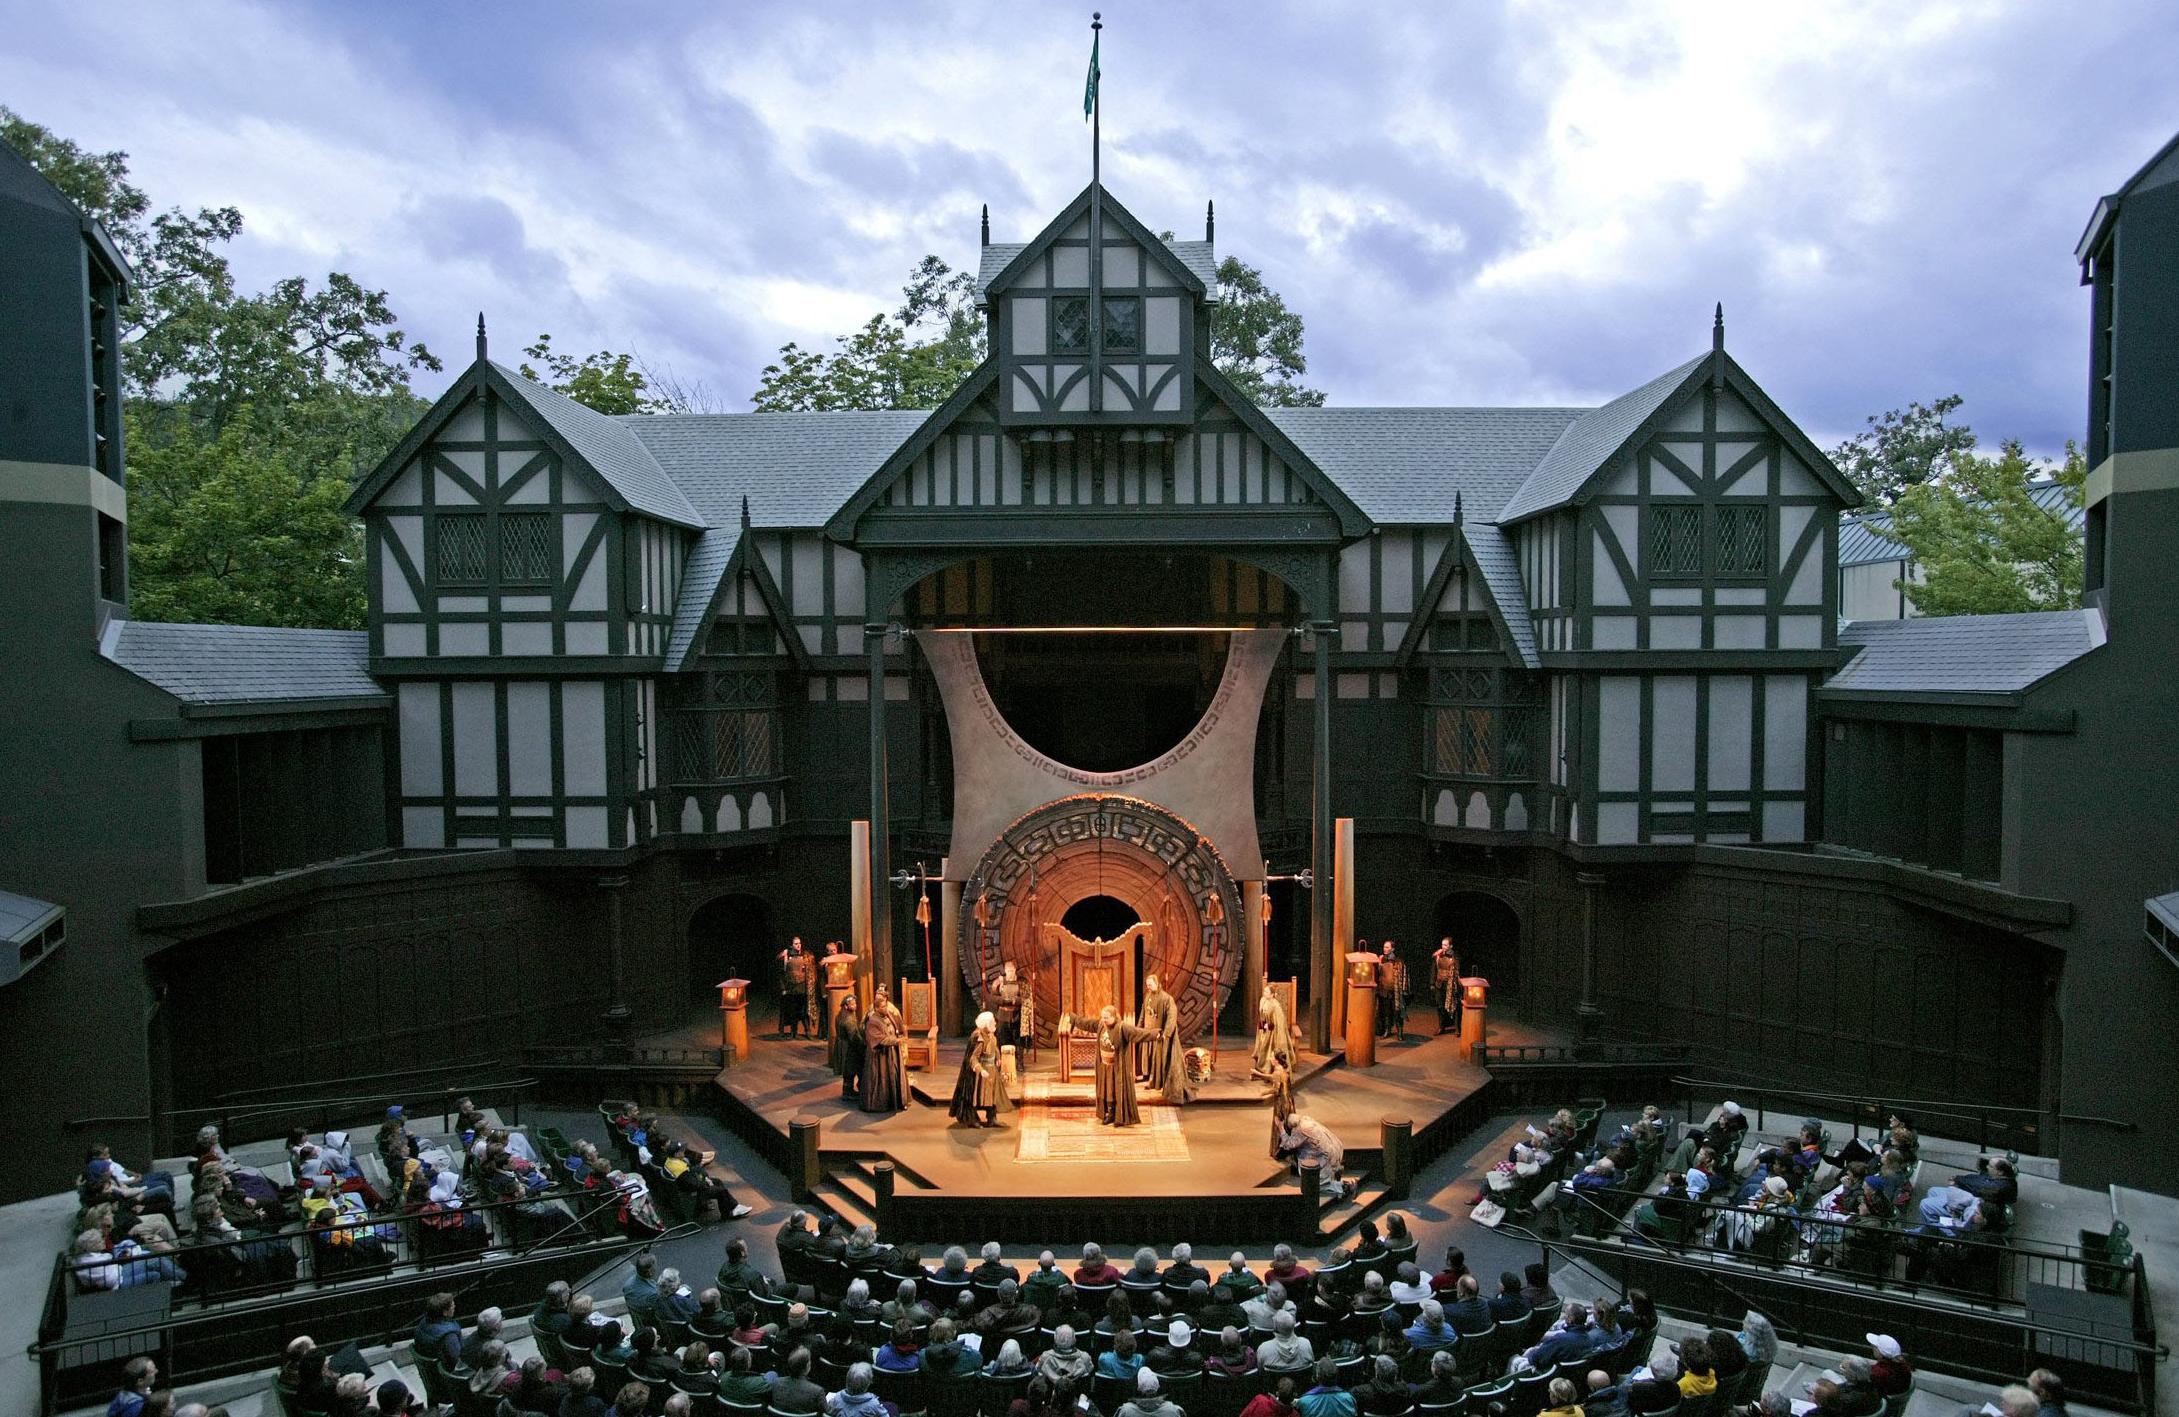 Oregon Shakespeare Festival receives $5 million donation | The Spokesman-Review